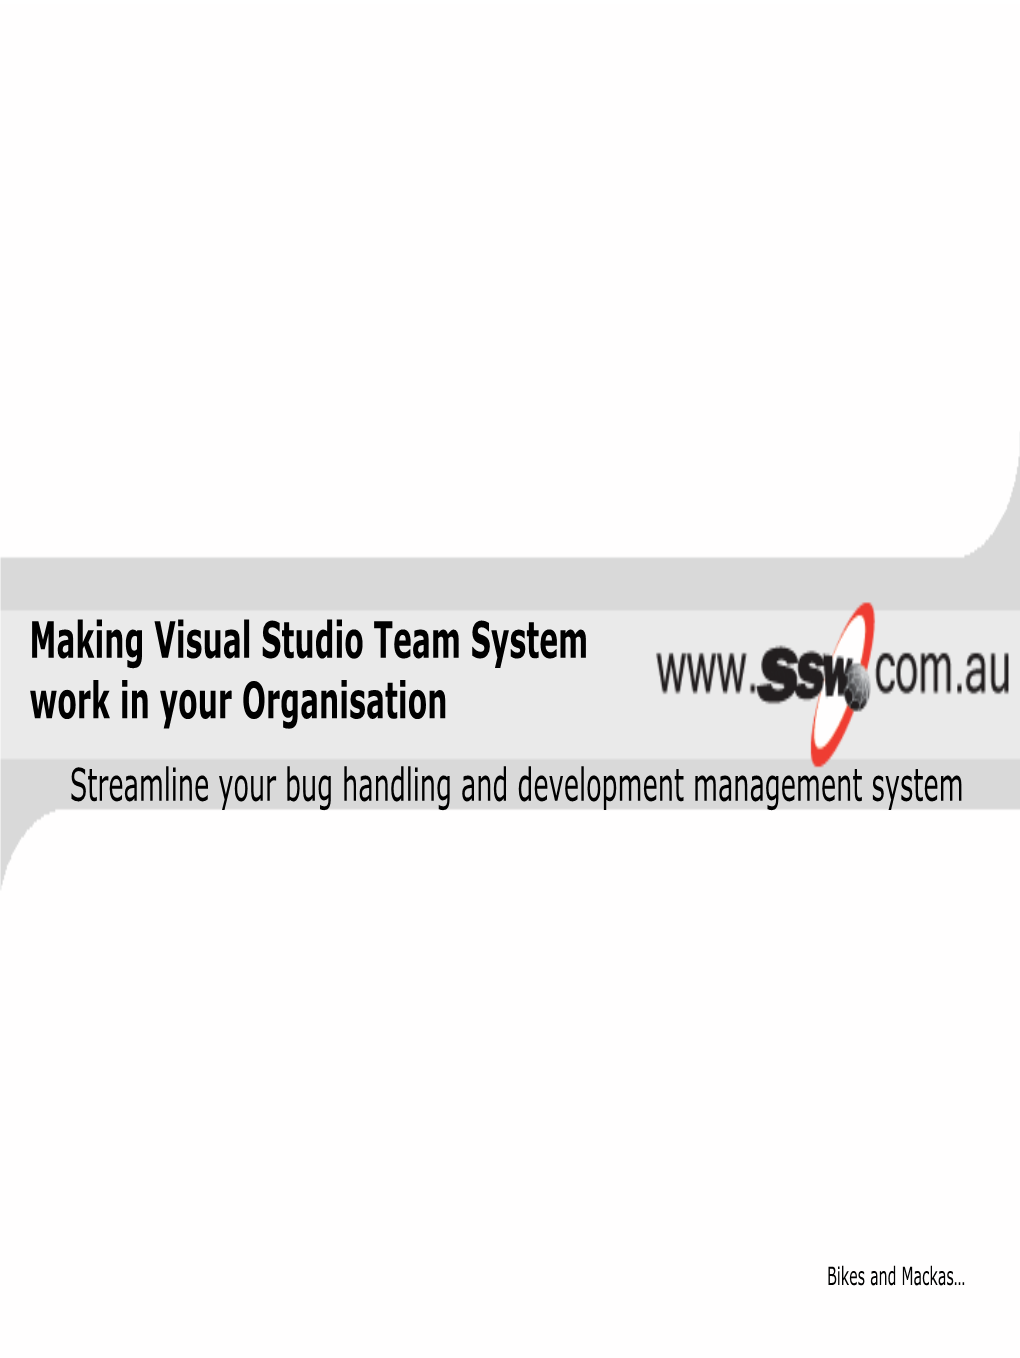 Making Visual Studio Team System Work in Your Organisation Streamline Your Bug Handling and Development Management System